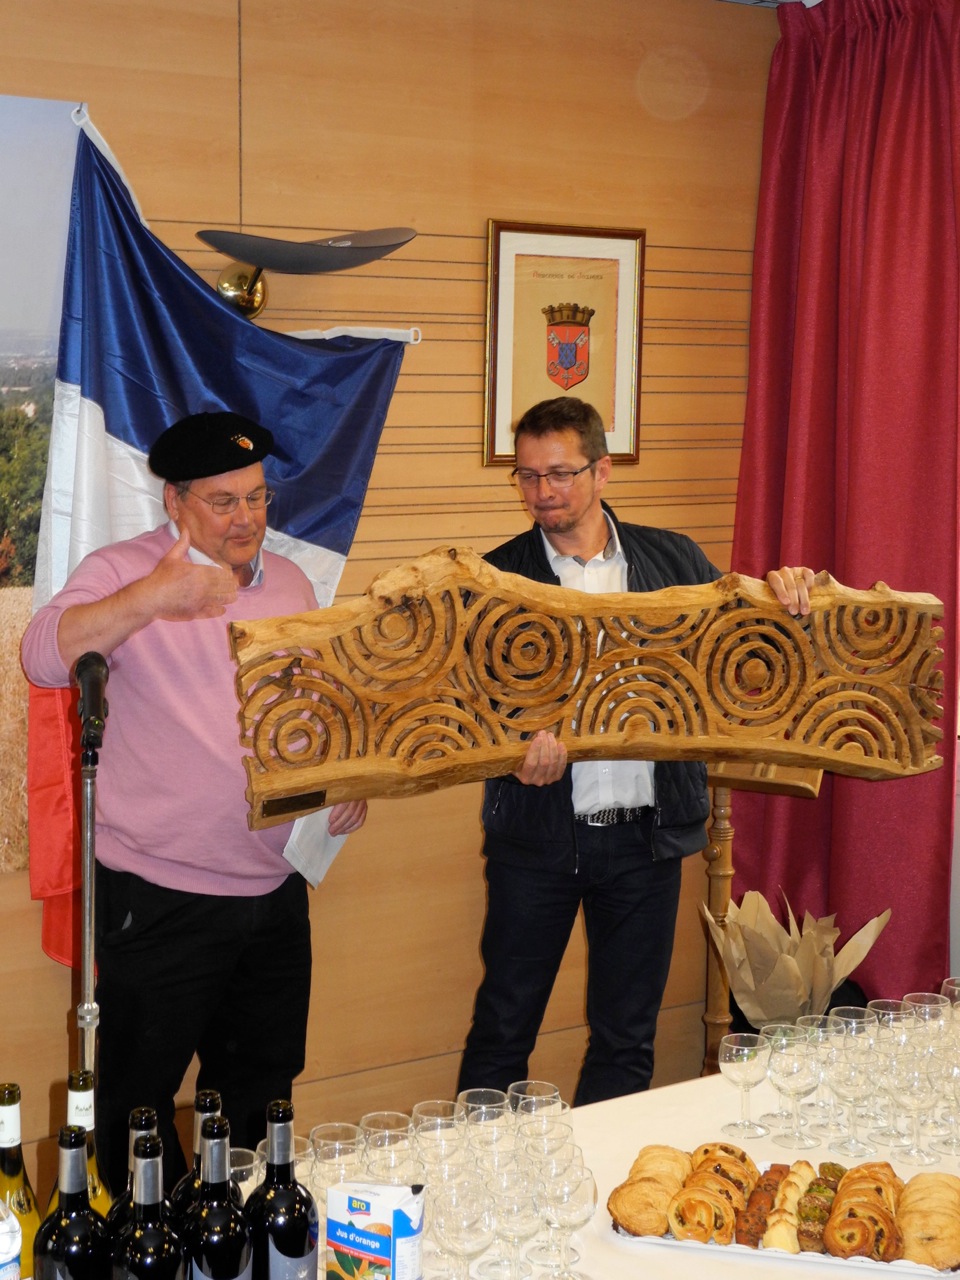 John Graham presents Keith Pettit's sculpture to Juziers' mayor, Philippe Ferrand